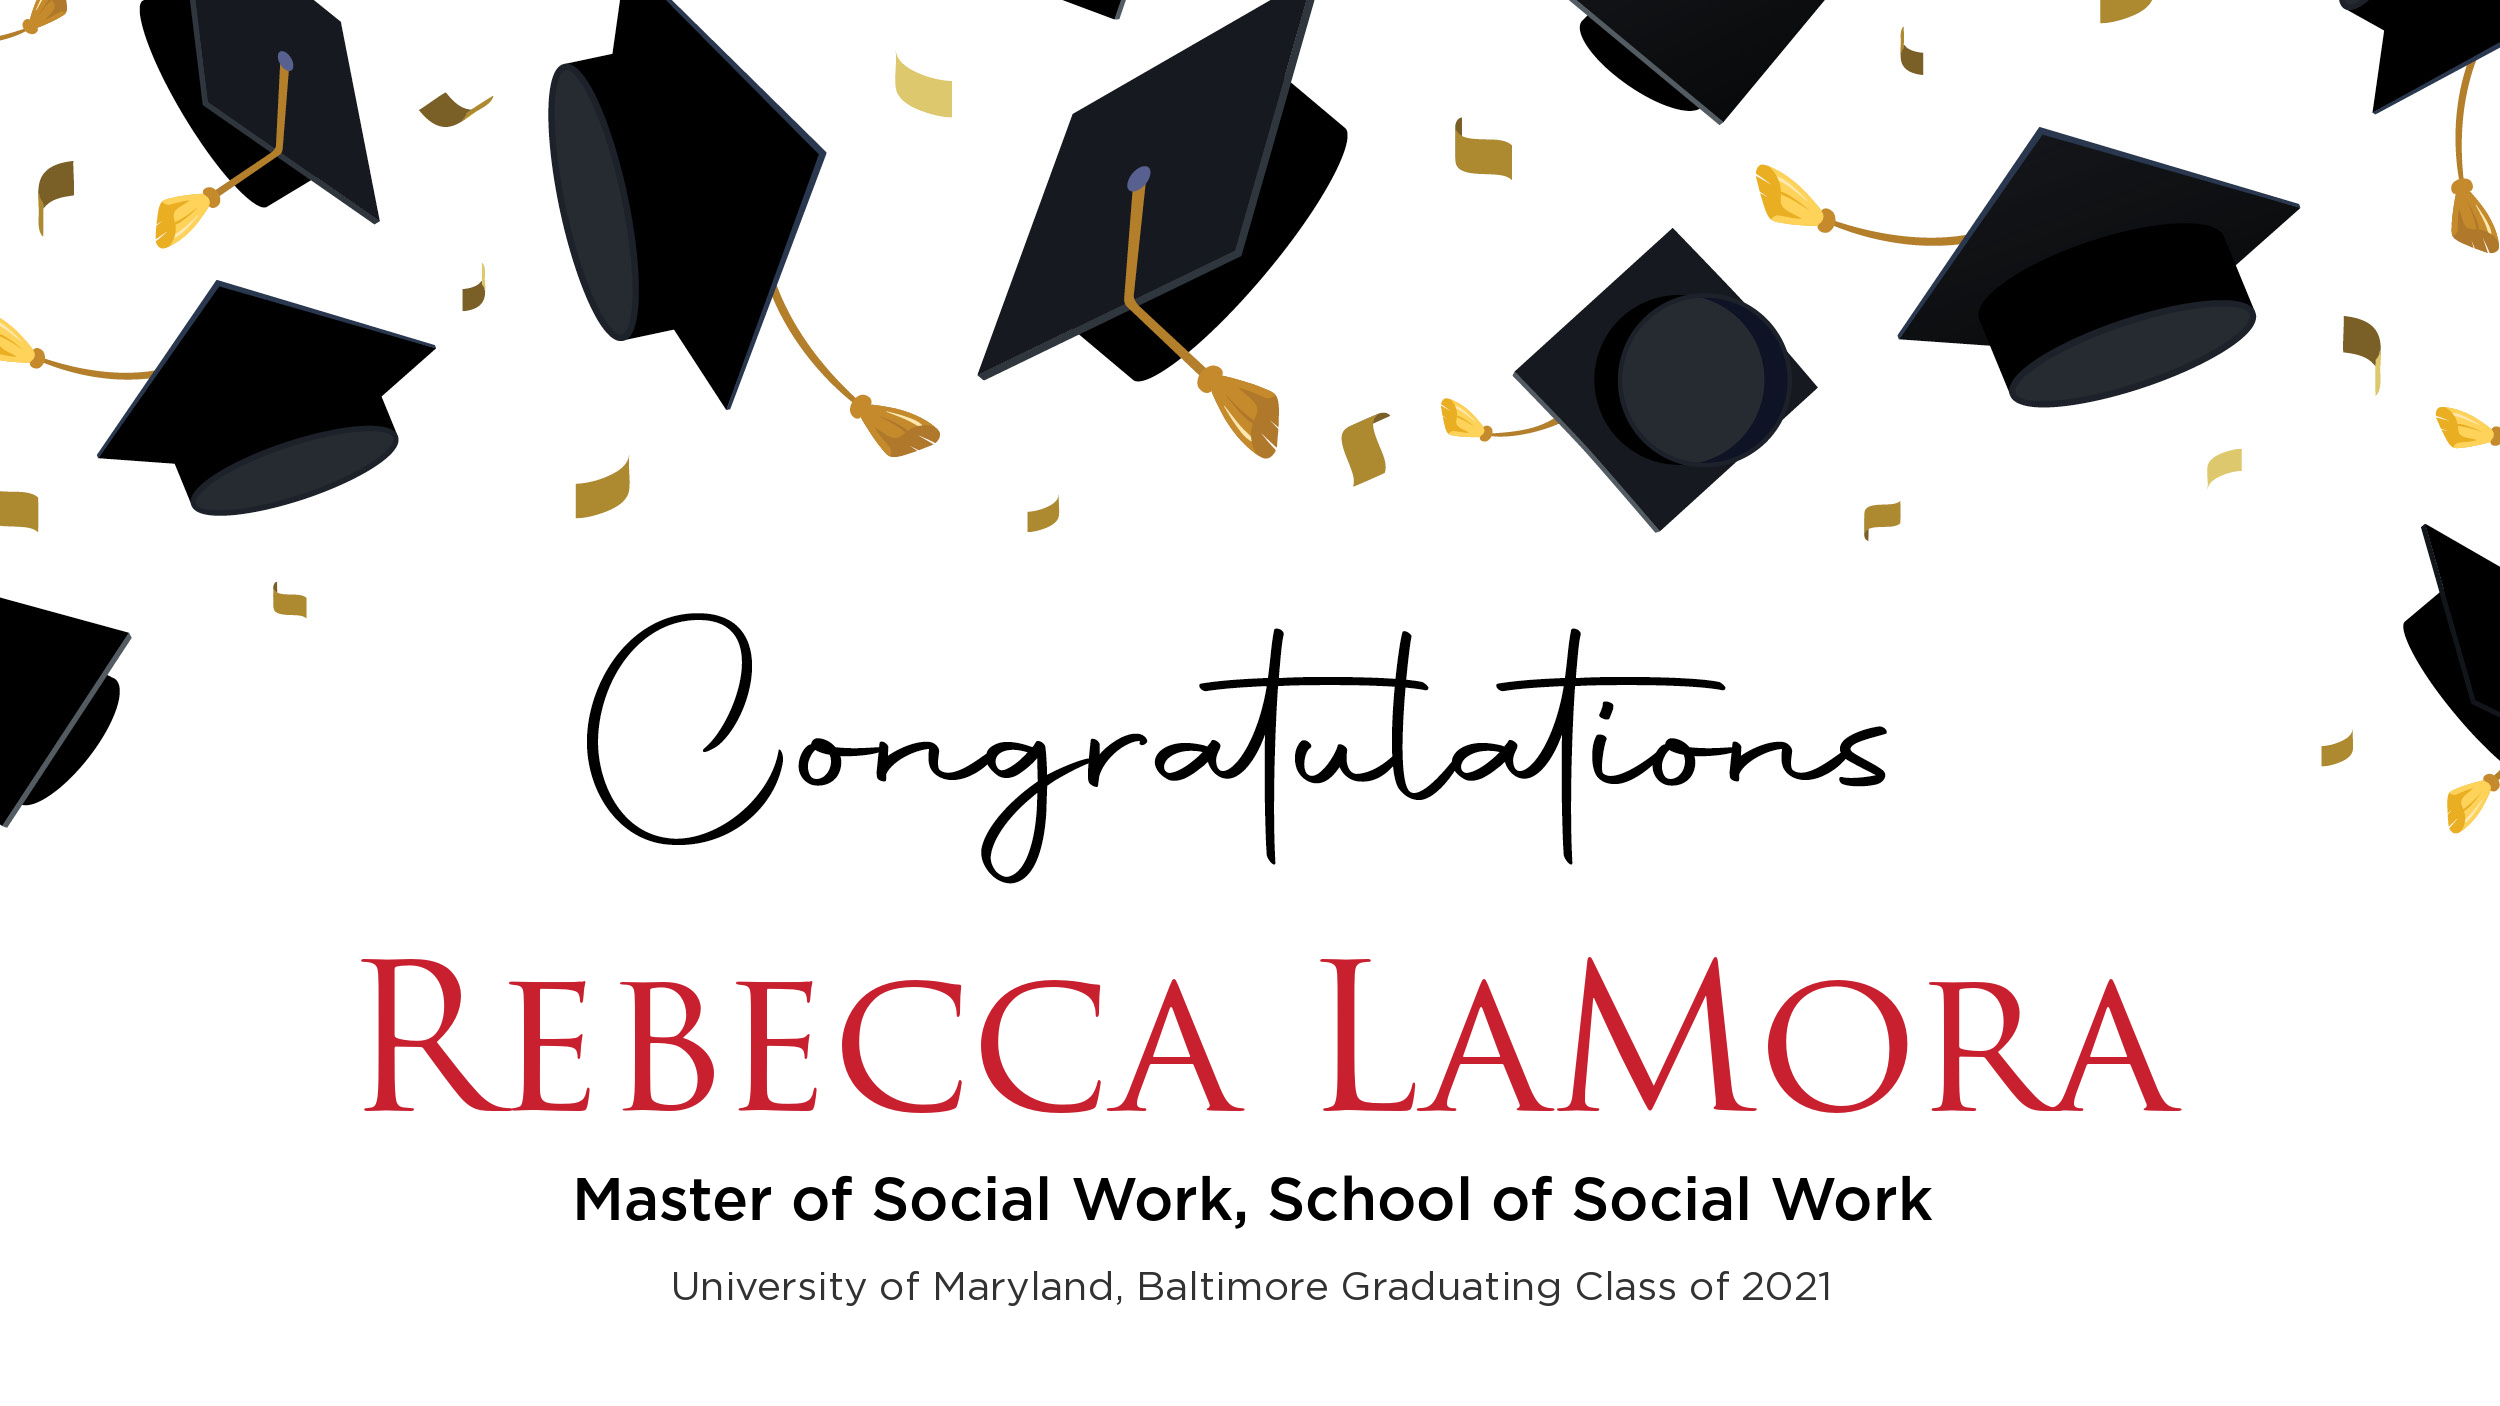 Congratulations Rebecca LaMora, Master of Social Work